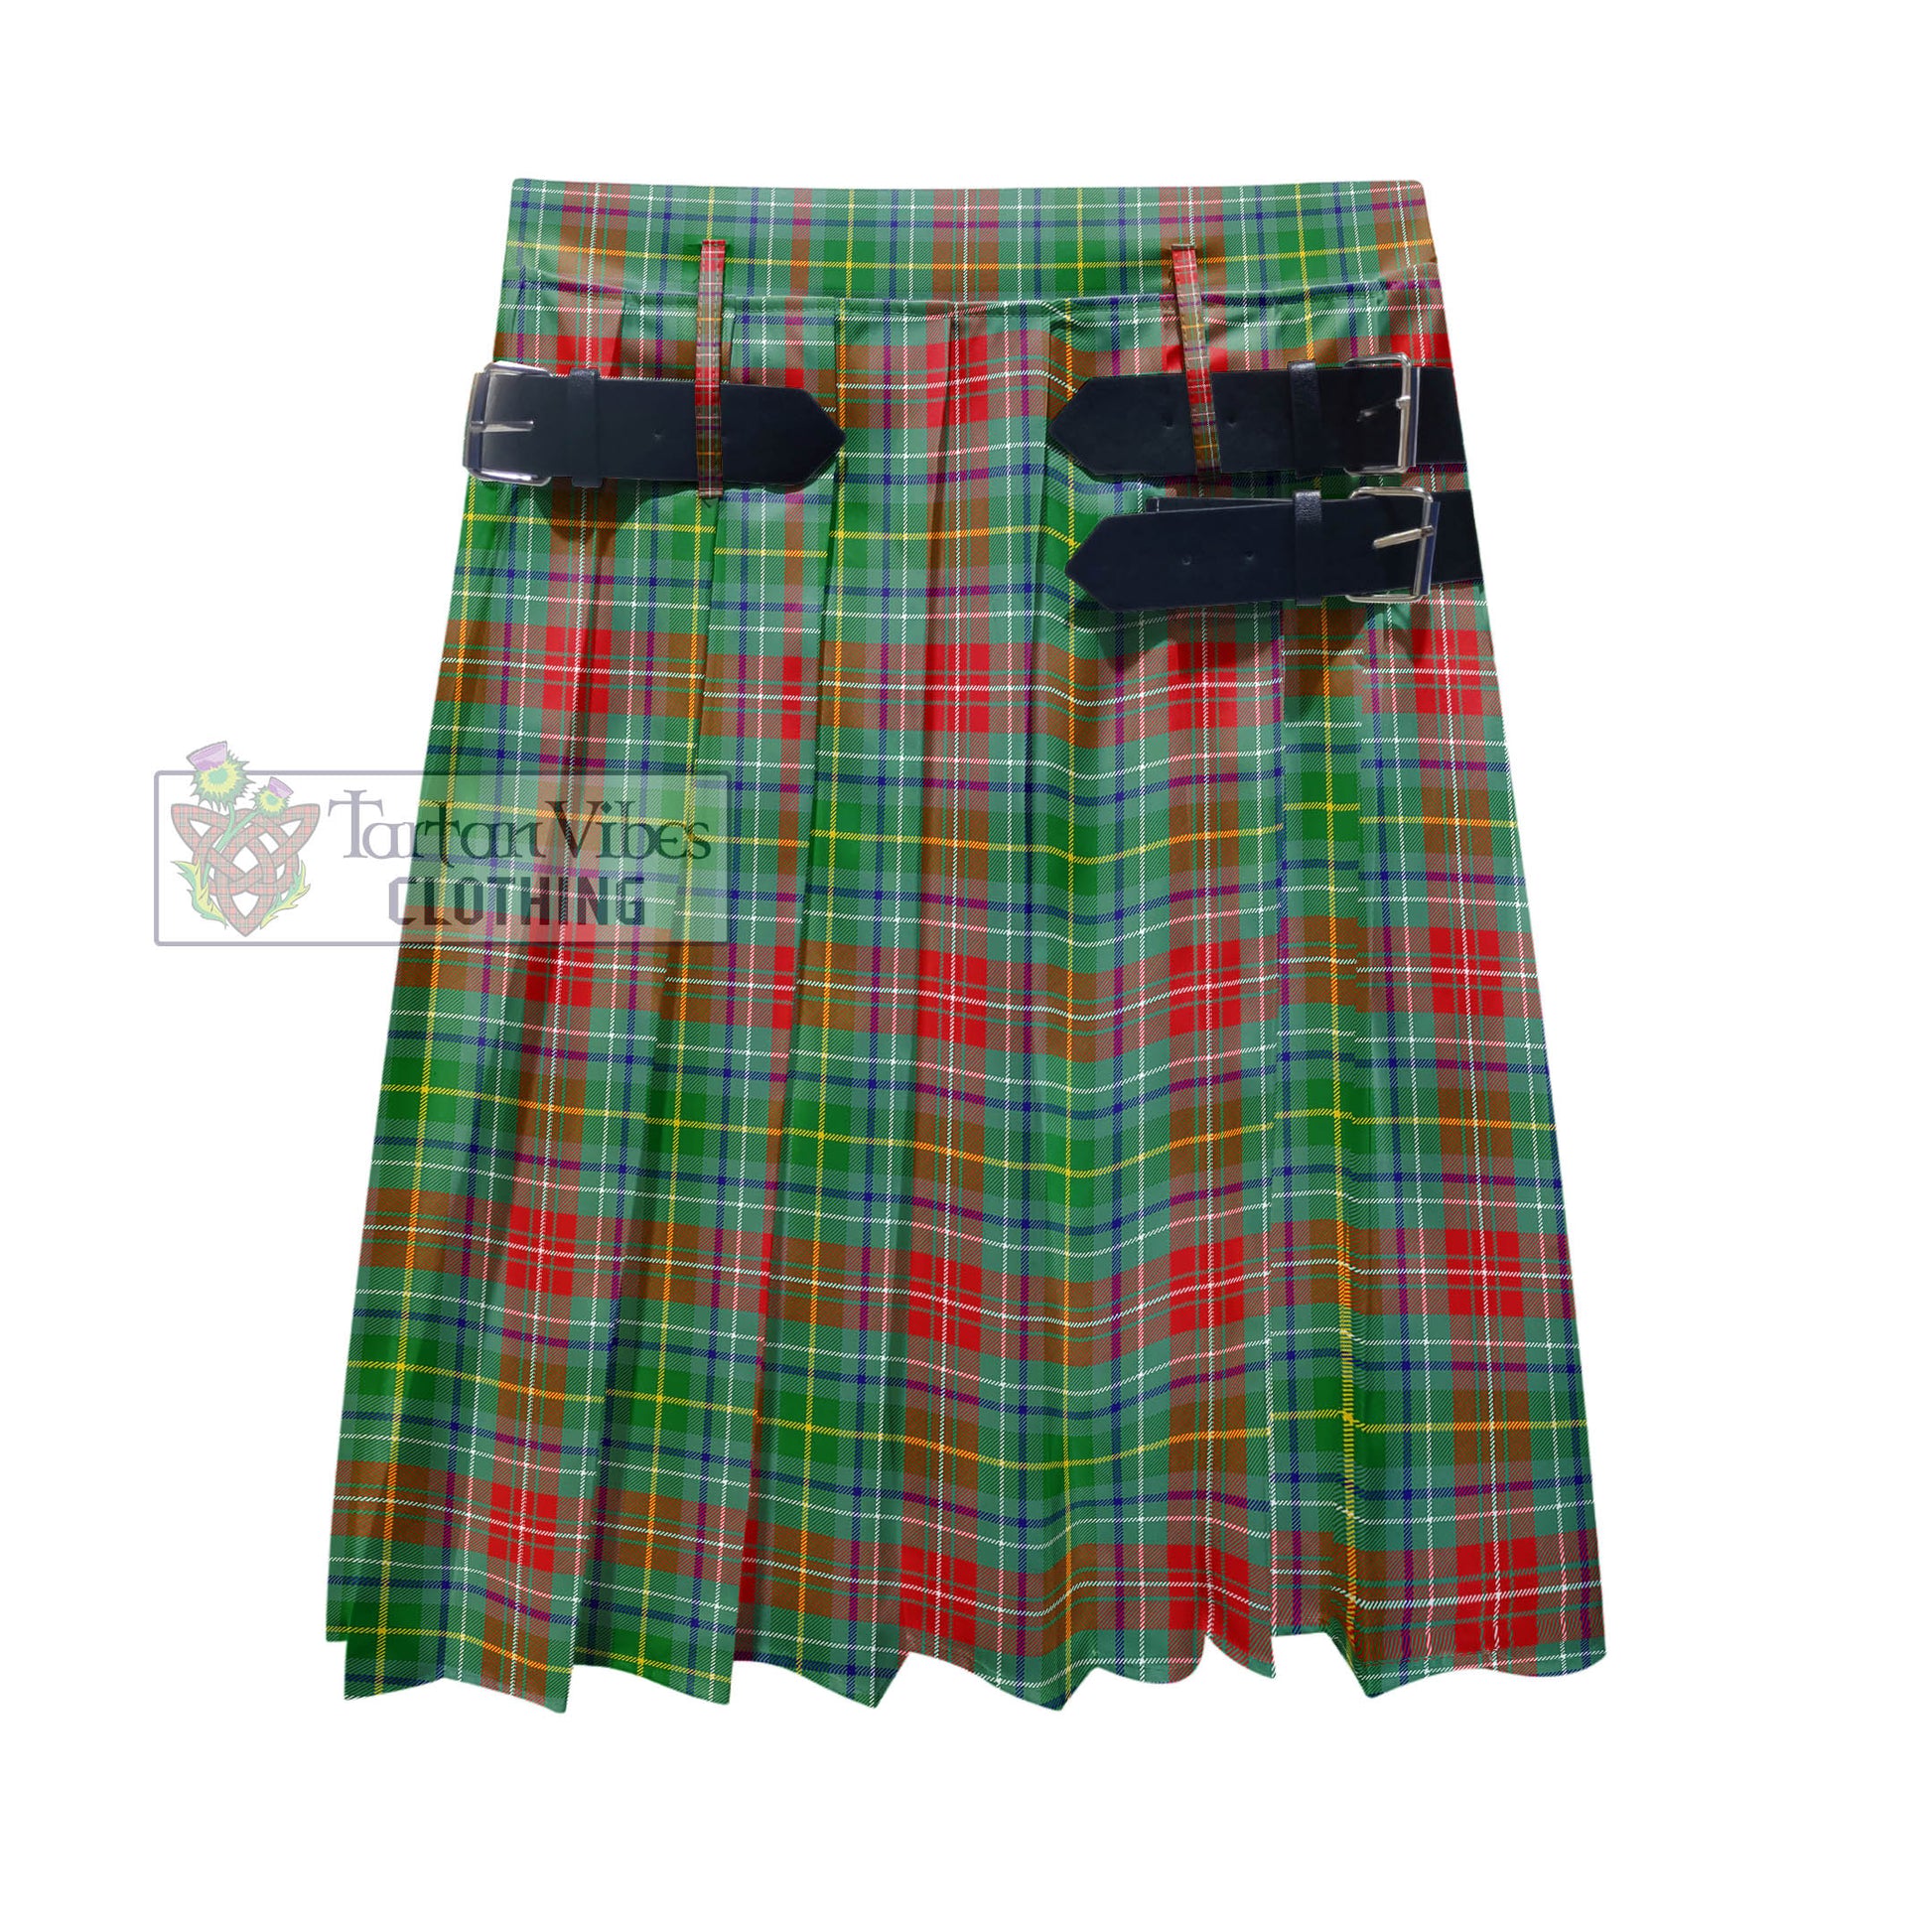 Tartan Vibes Clothing Muirhead Tartan Men's Pleated Skirt - Fashion Casual Retro Scottish Style